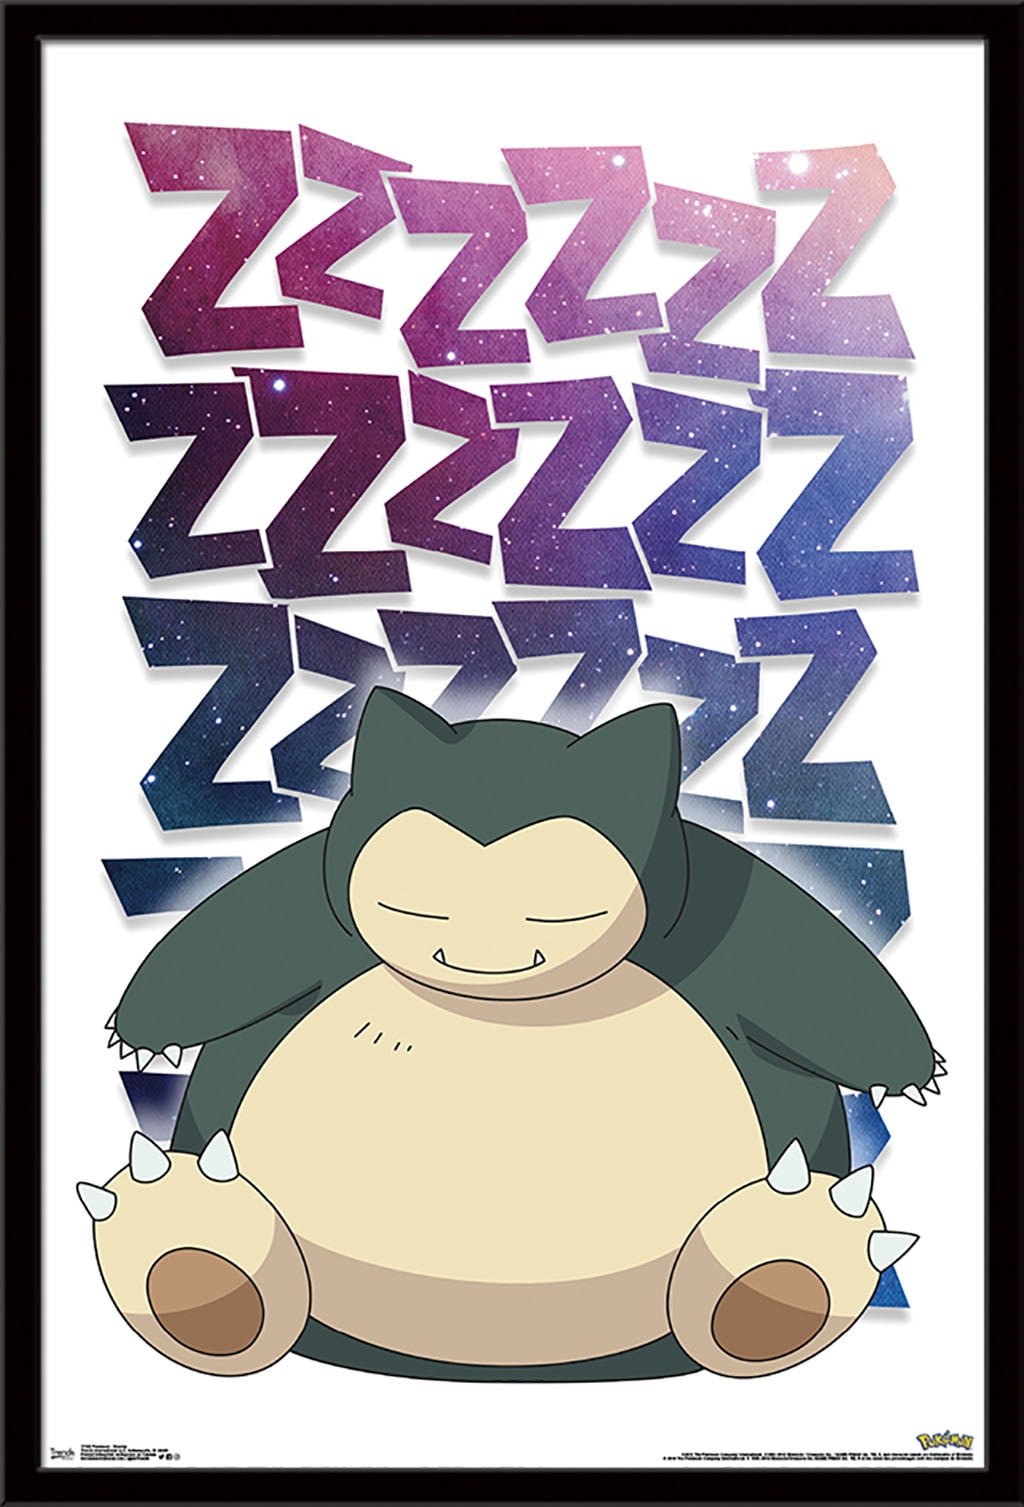 Trends International Pokémon - Favorites Wall Poster, 22.375 x 34, Poster  & Mount Bundle